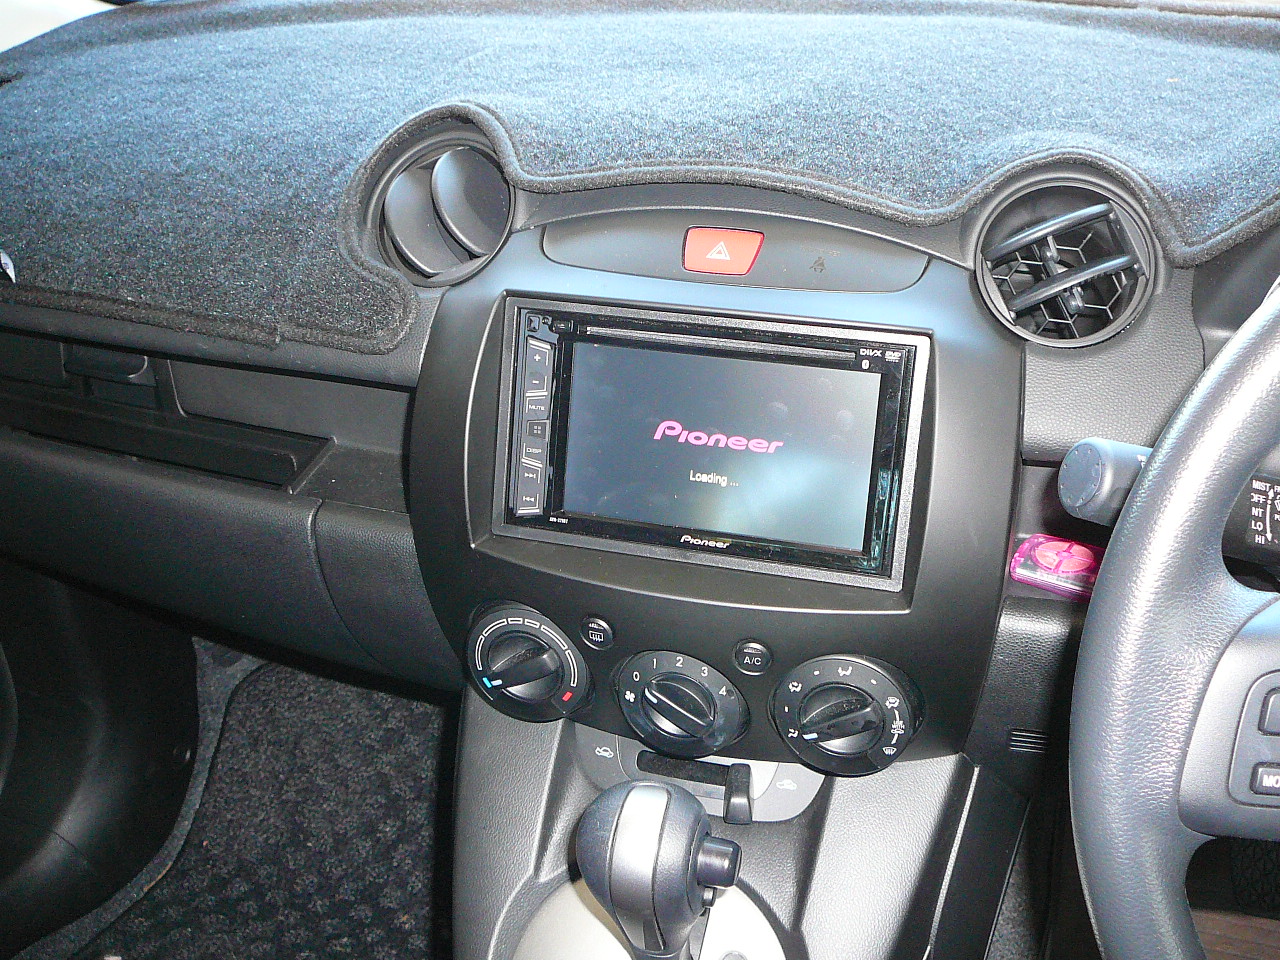 Mazda 2, Pioneer Audio Visual Unit AVH-3700DAB Installation with Reverse Camera